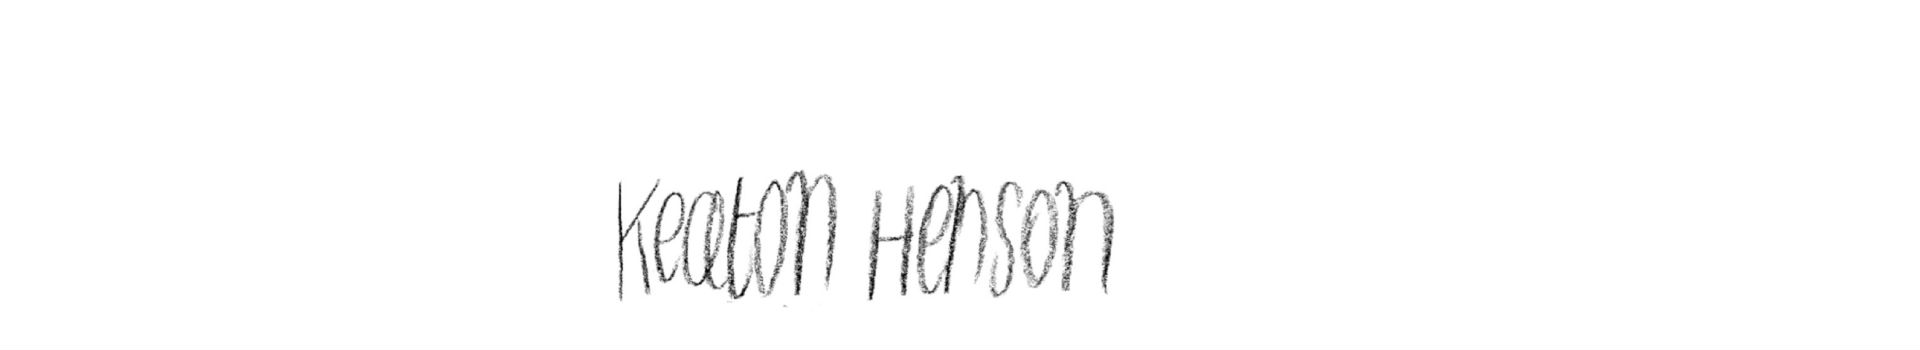 Keaton Henson banner image